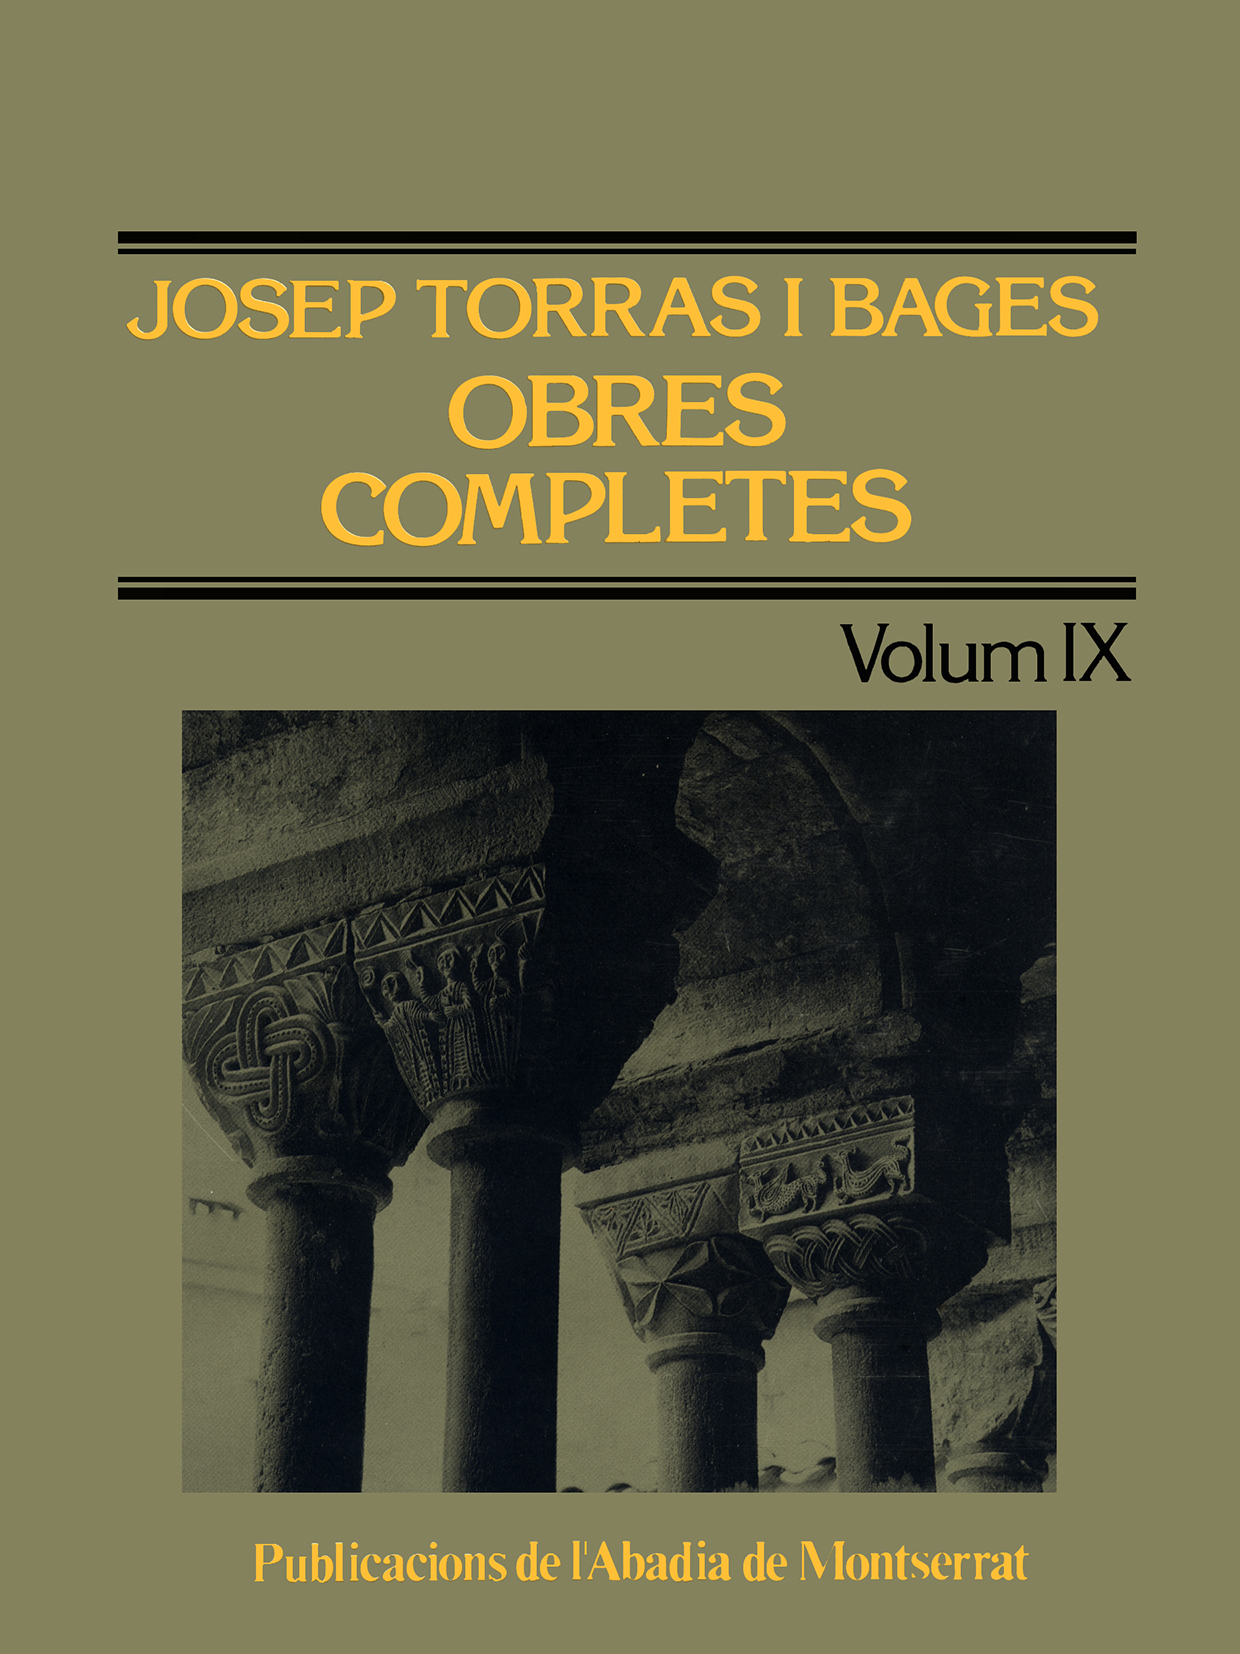 Josep Torras i Bages